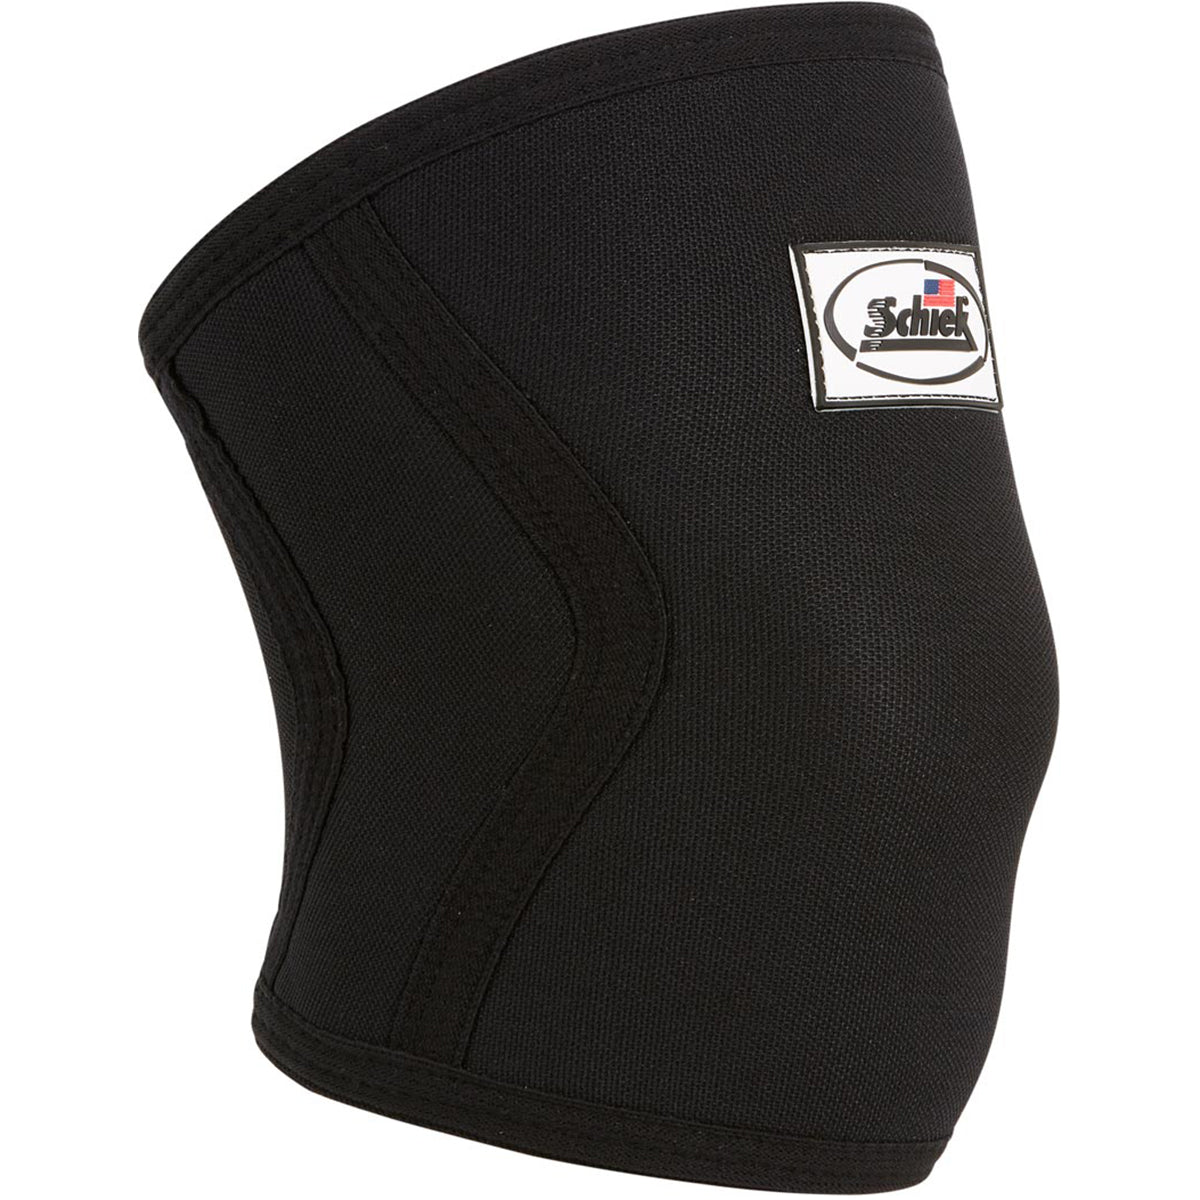 Schiek Sports Model 1170 Neoprene Knee Sleeves - Black Schiek Sports